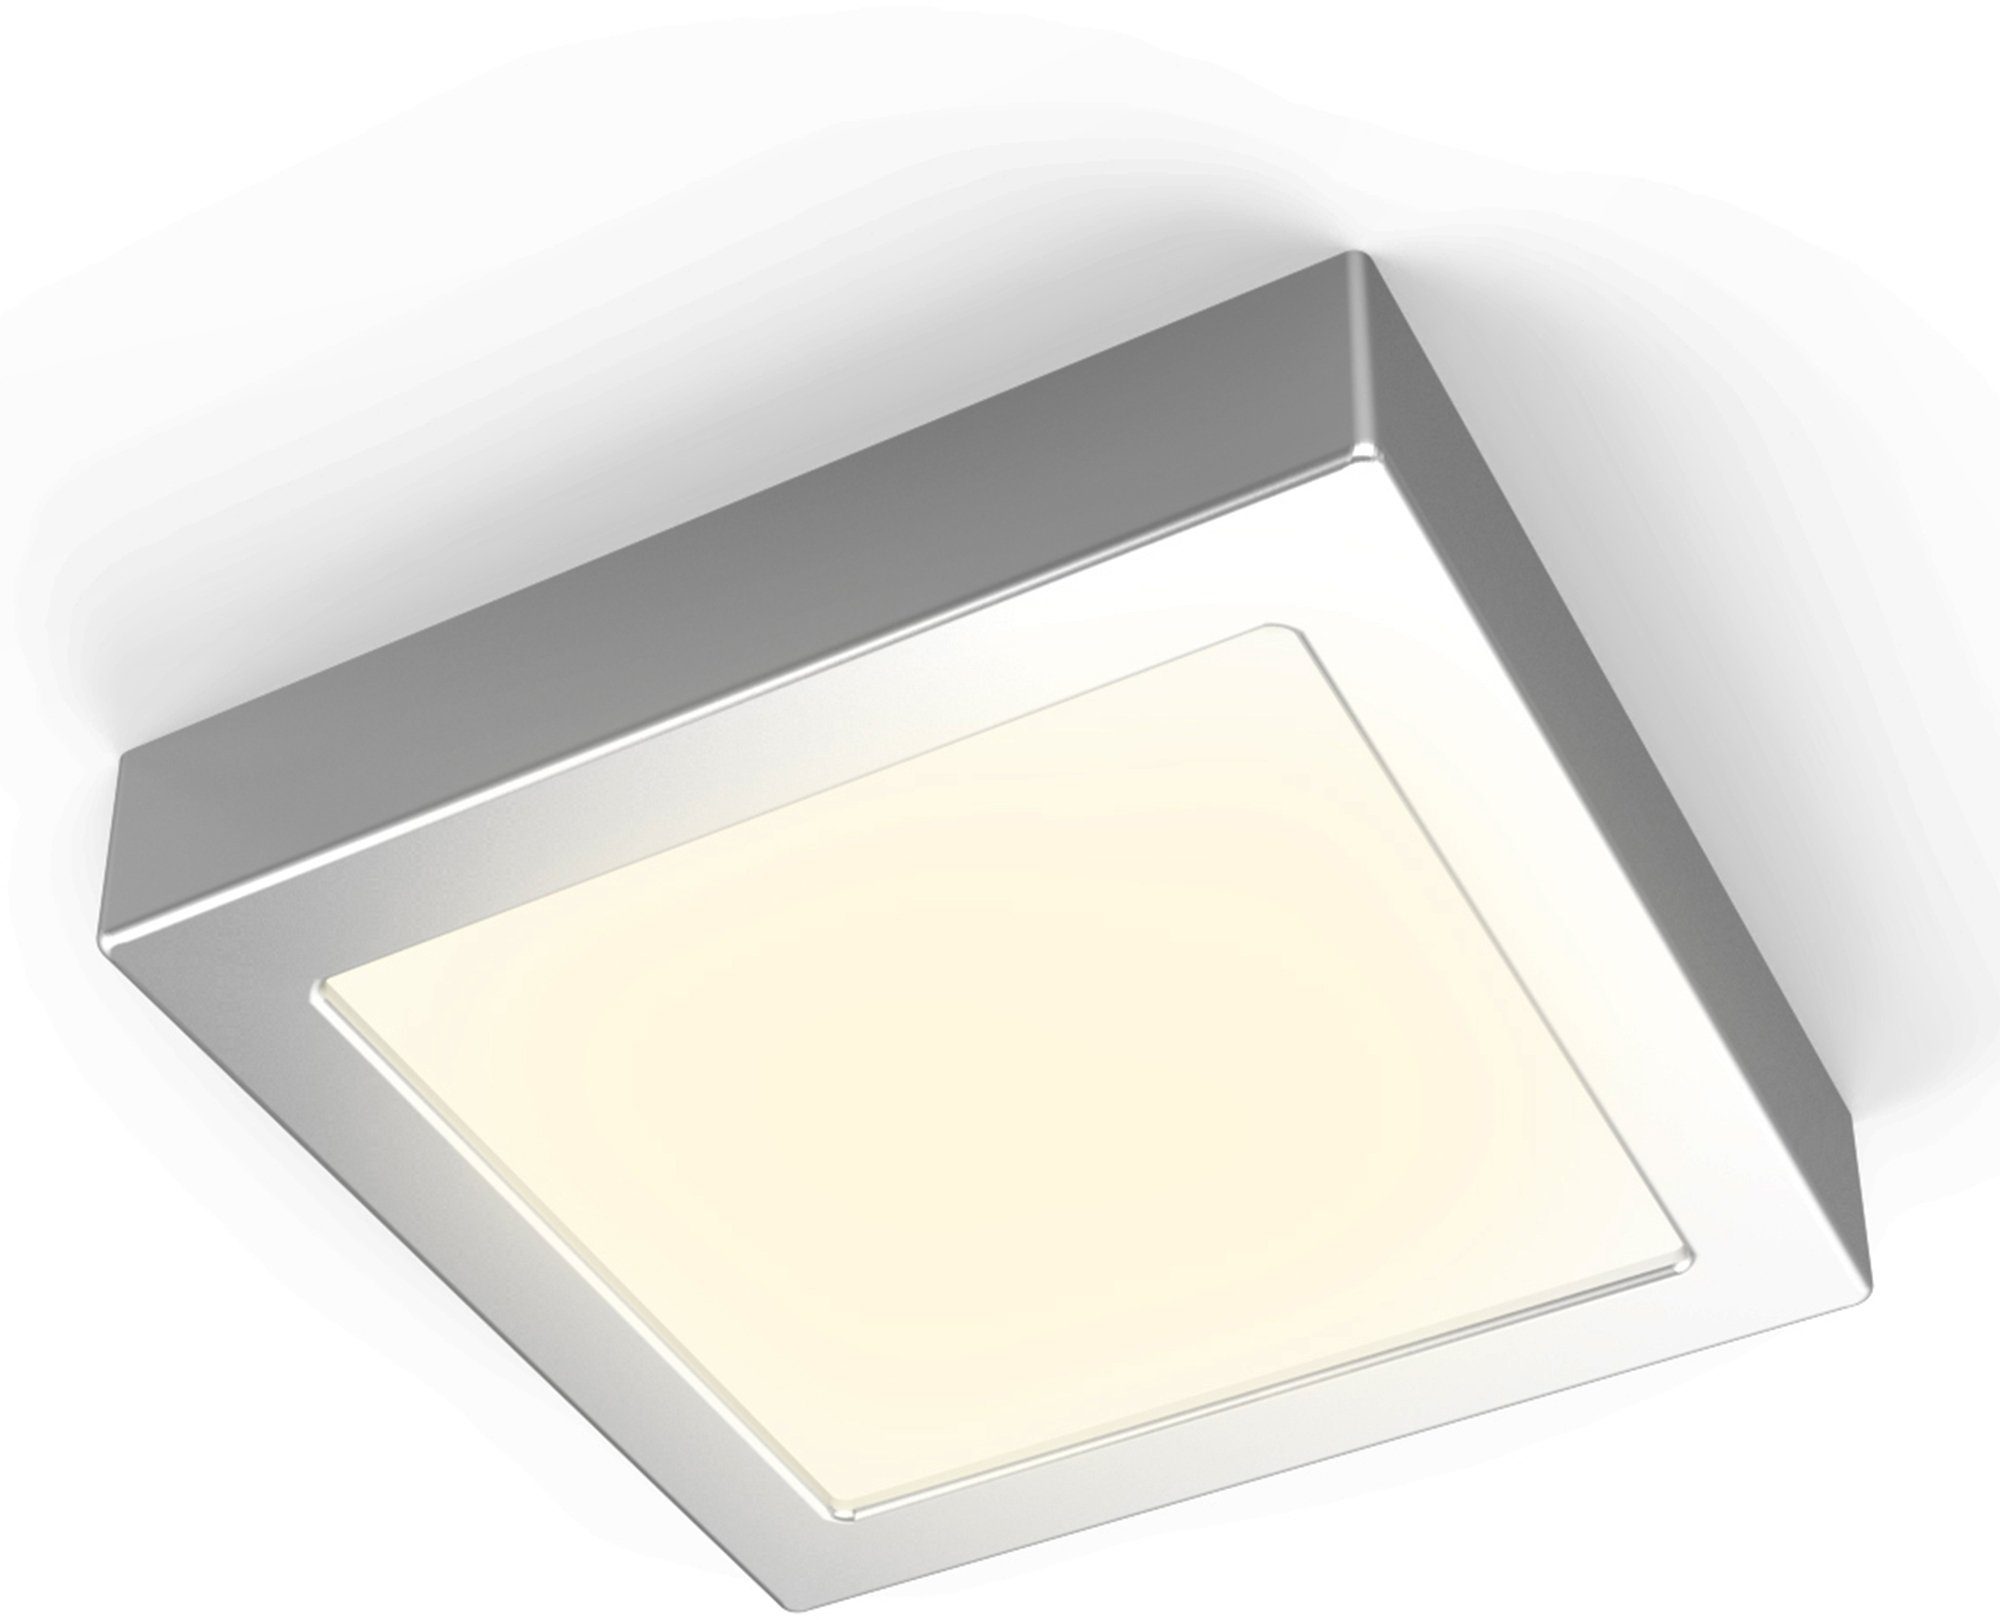 B.K.Licht LED Lampe Warmweiß, Panel Garnet, LED Aufbaustrahler LED Aufbauleuchte 12W integriert, Aufputzspot Unterbauleuchte fest